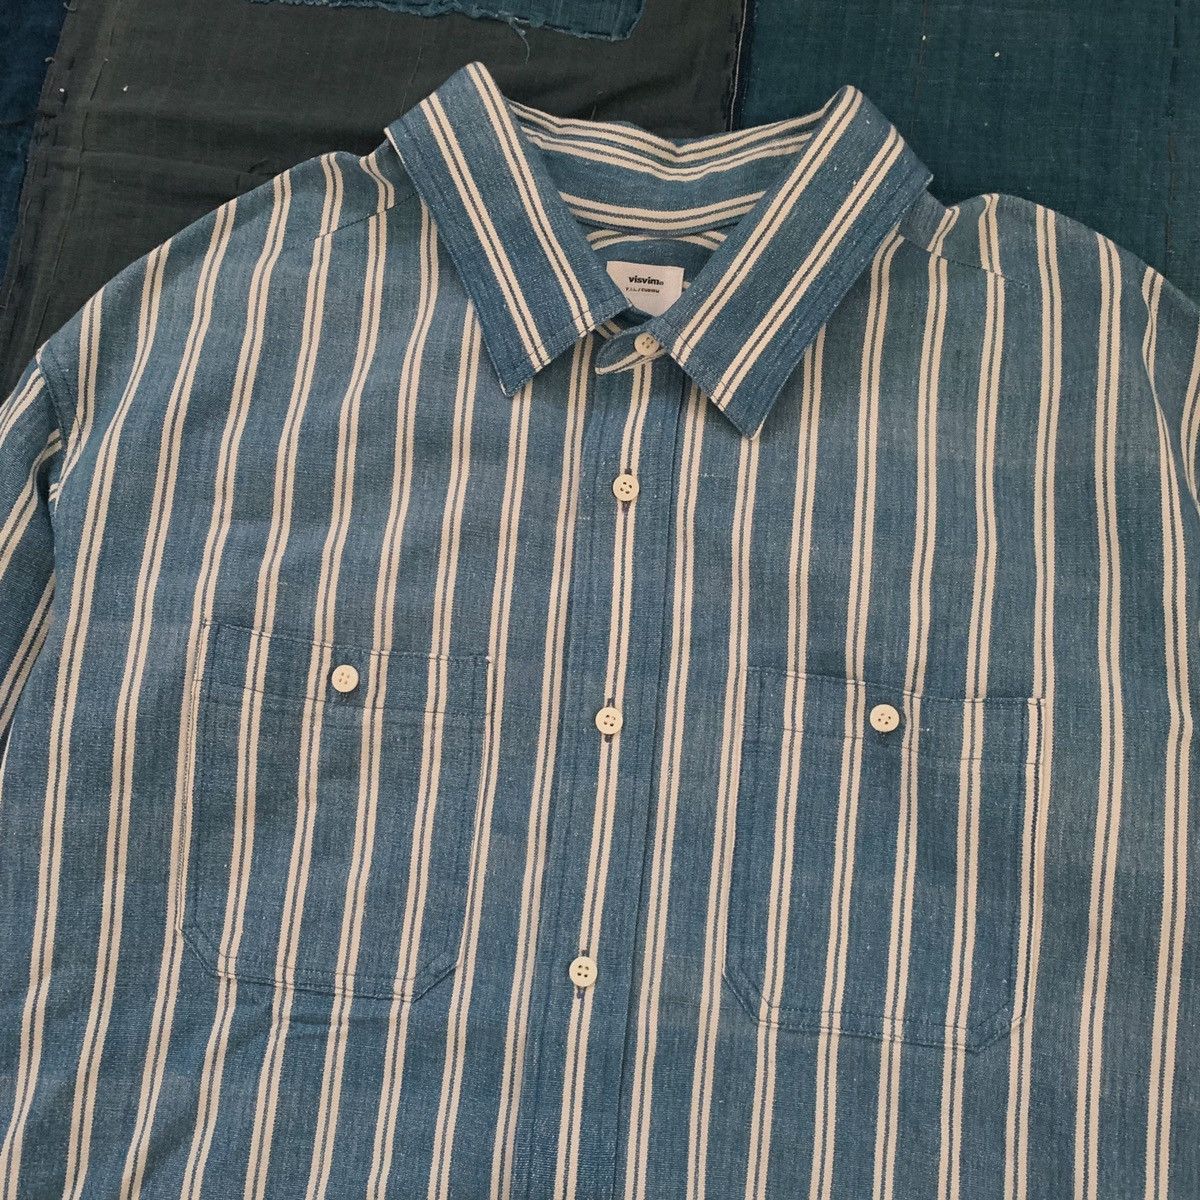 Visvim Mainsail shirt buyi (hand woven) | Grailed